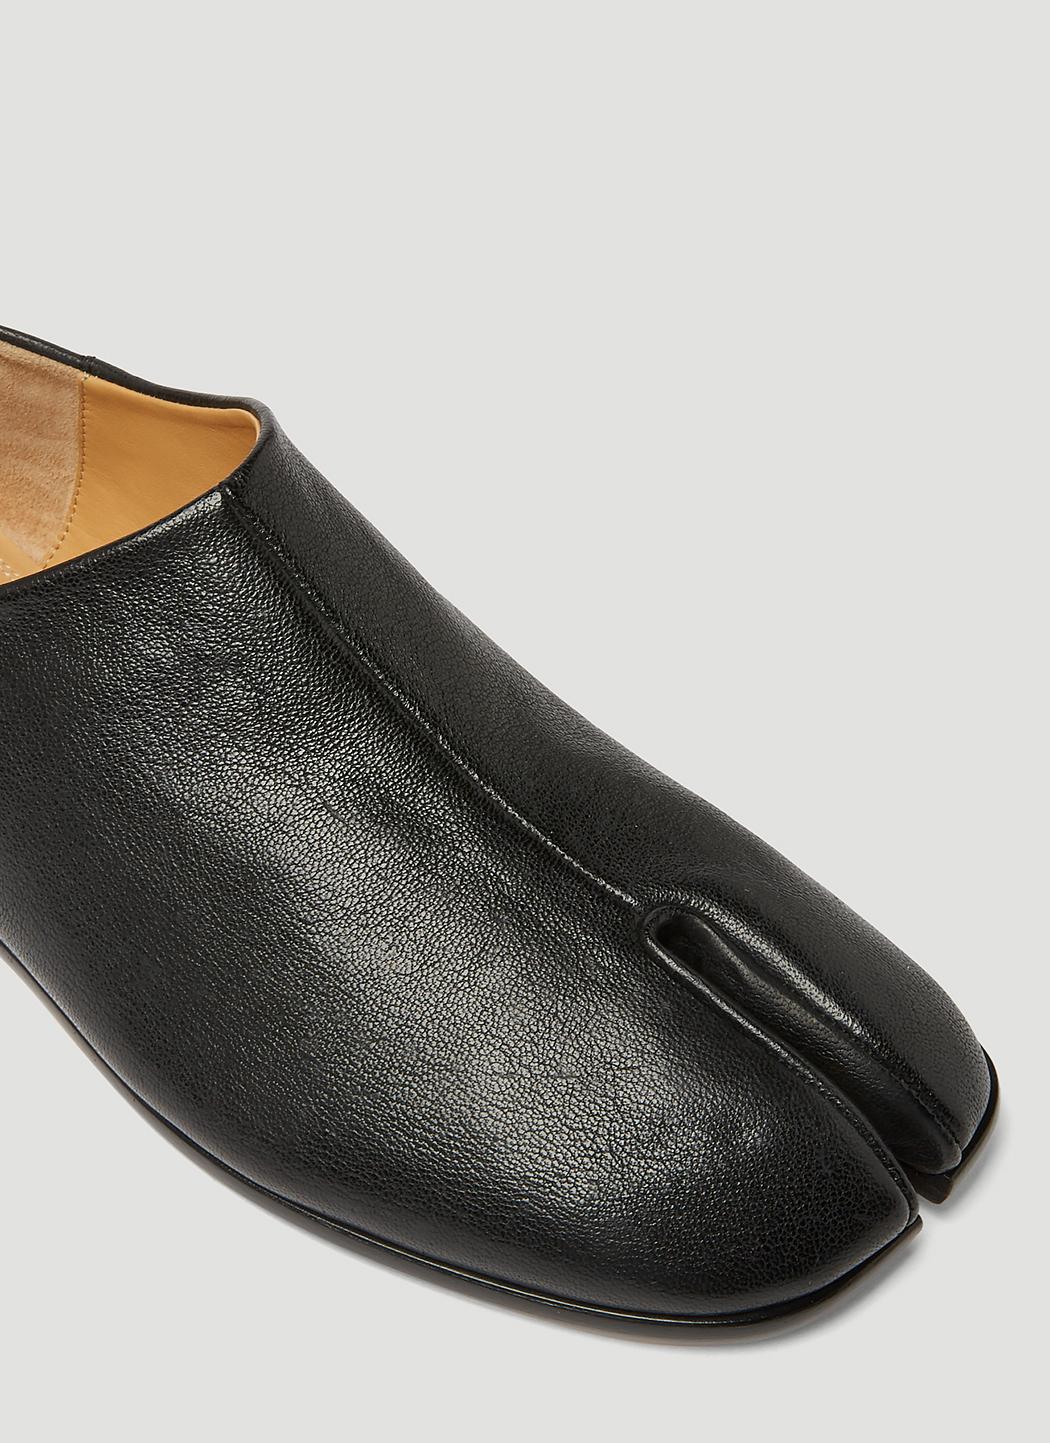 Maison Margiela Tabi Babouche Loafers in Black for Men | Lyst